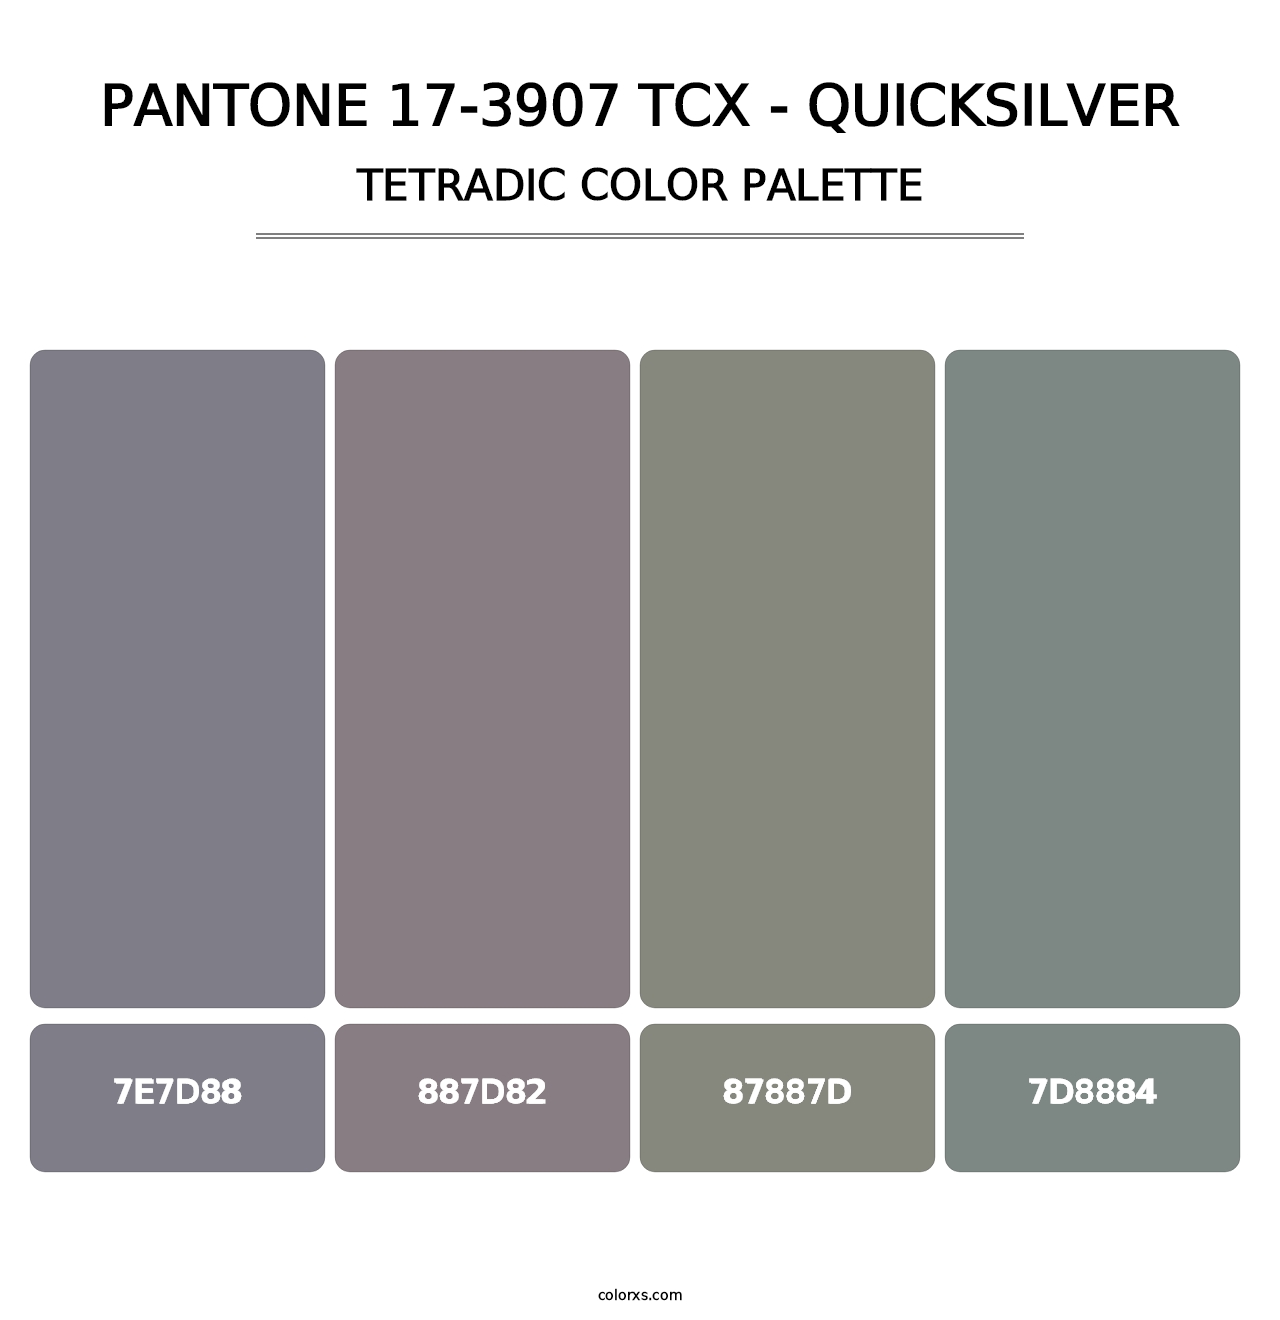 PANTONE 17-3907 TCX - Quicksilver - Tetradic Color Palette